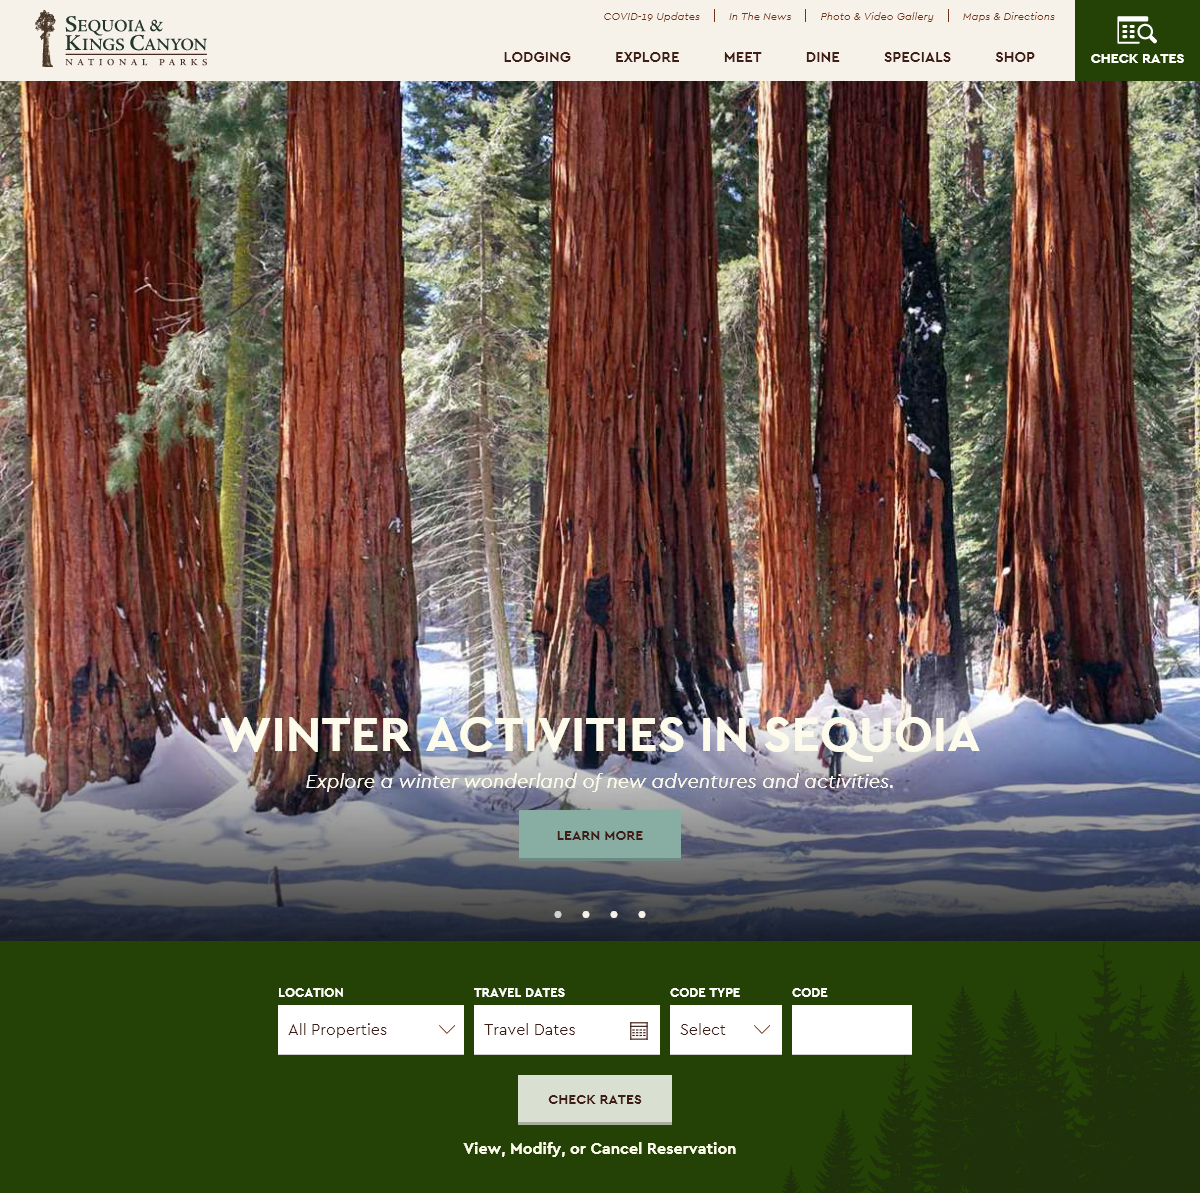 A complete backup of visitsequoia.com